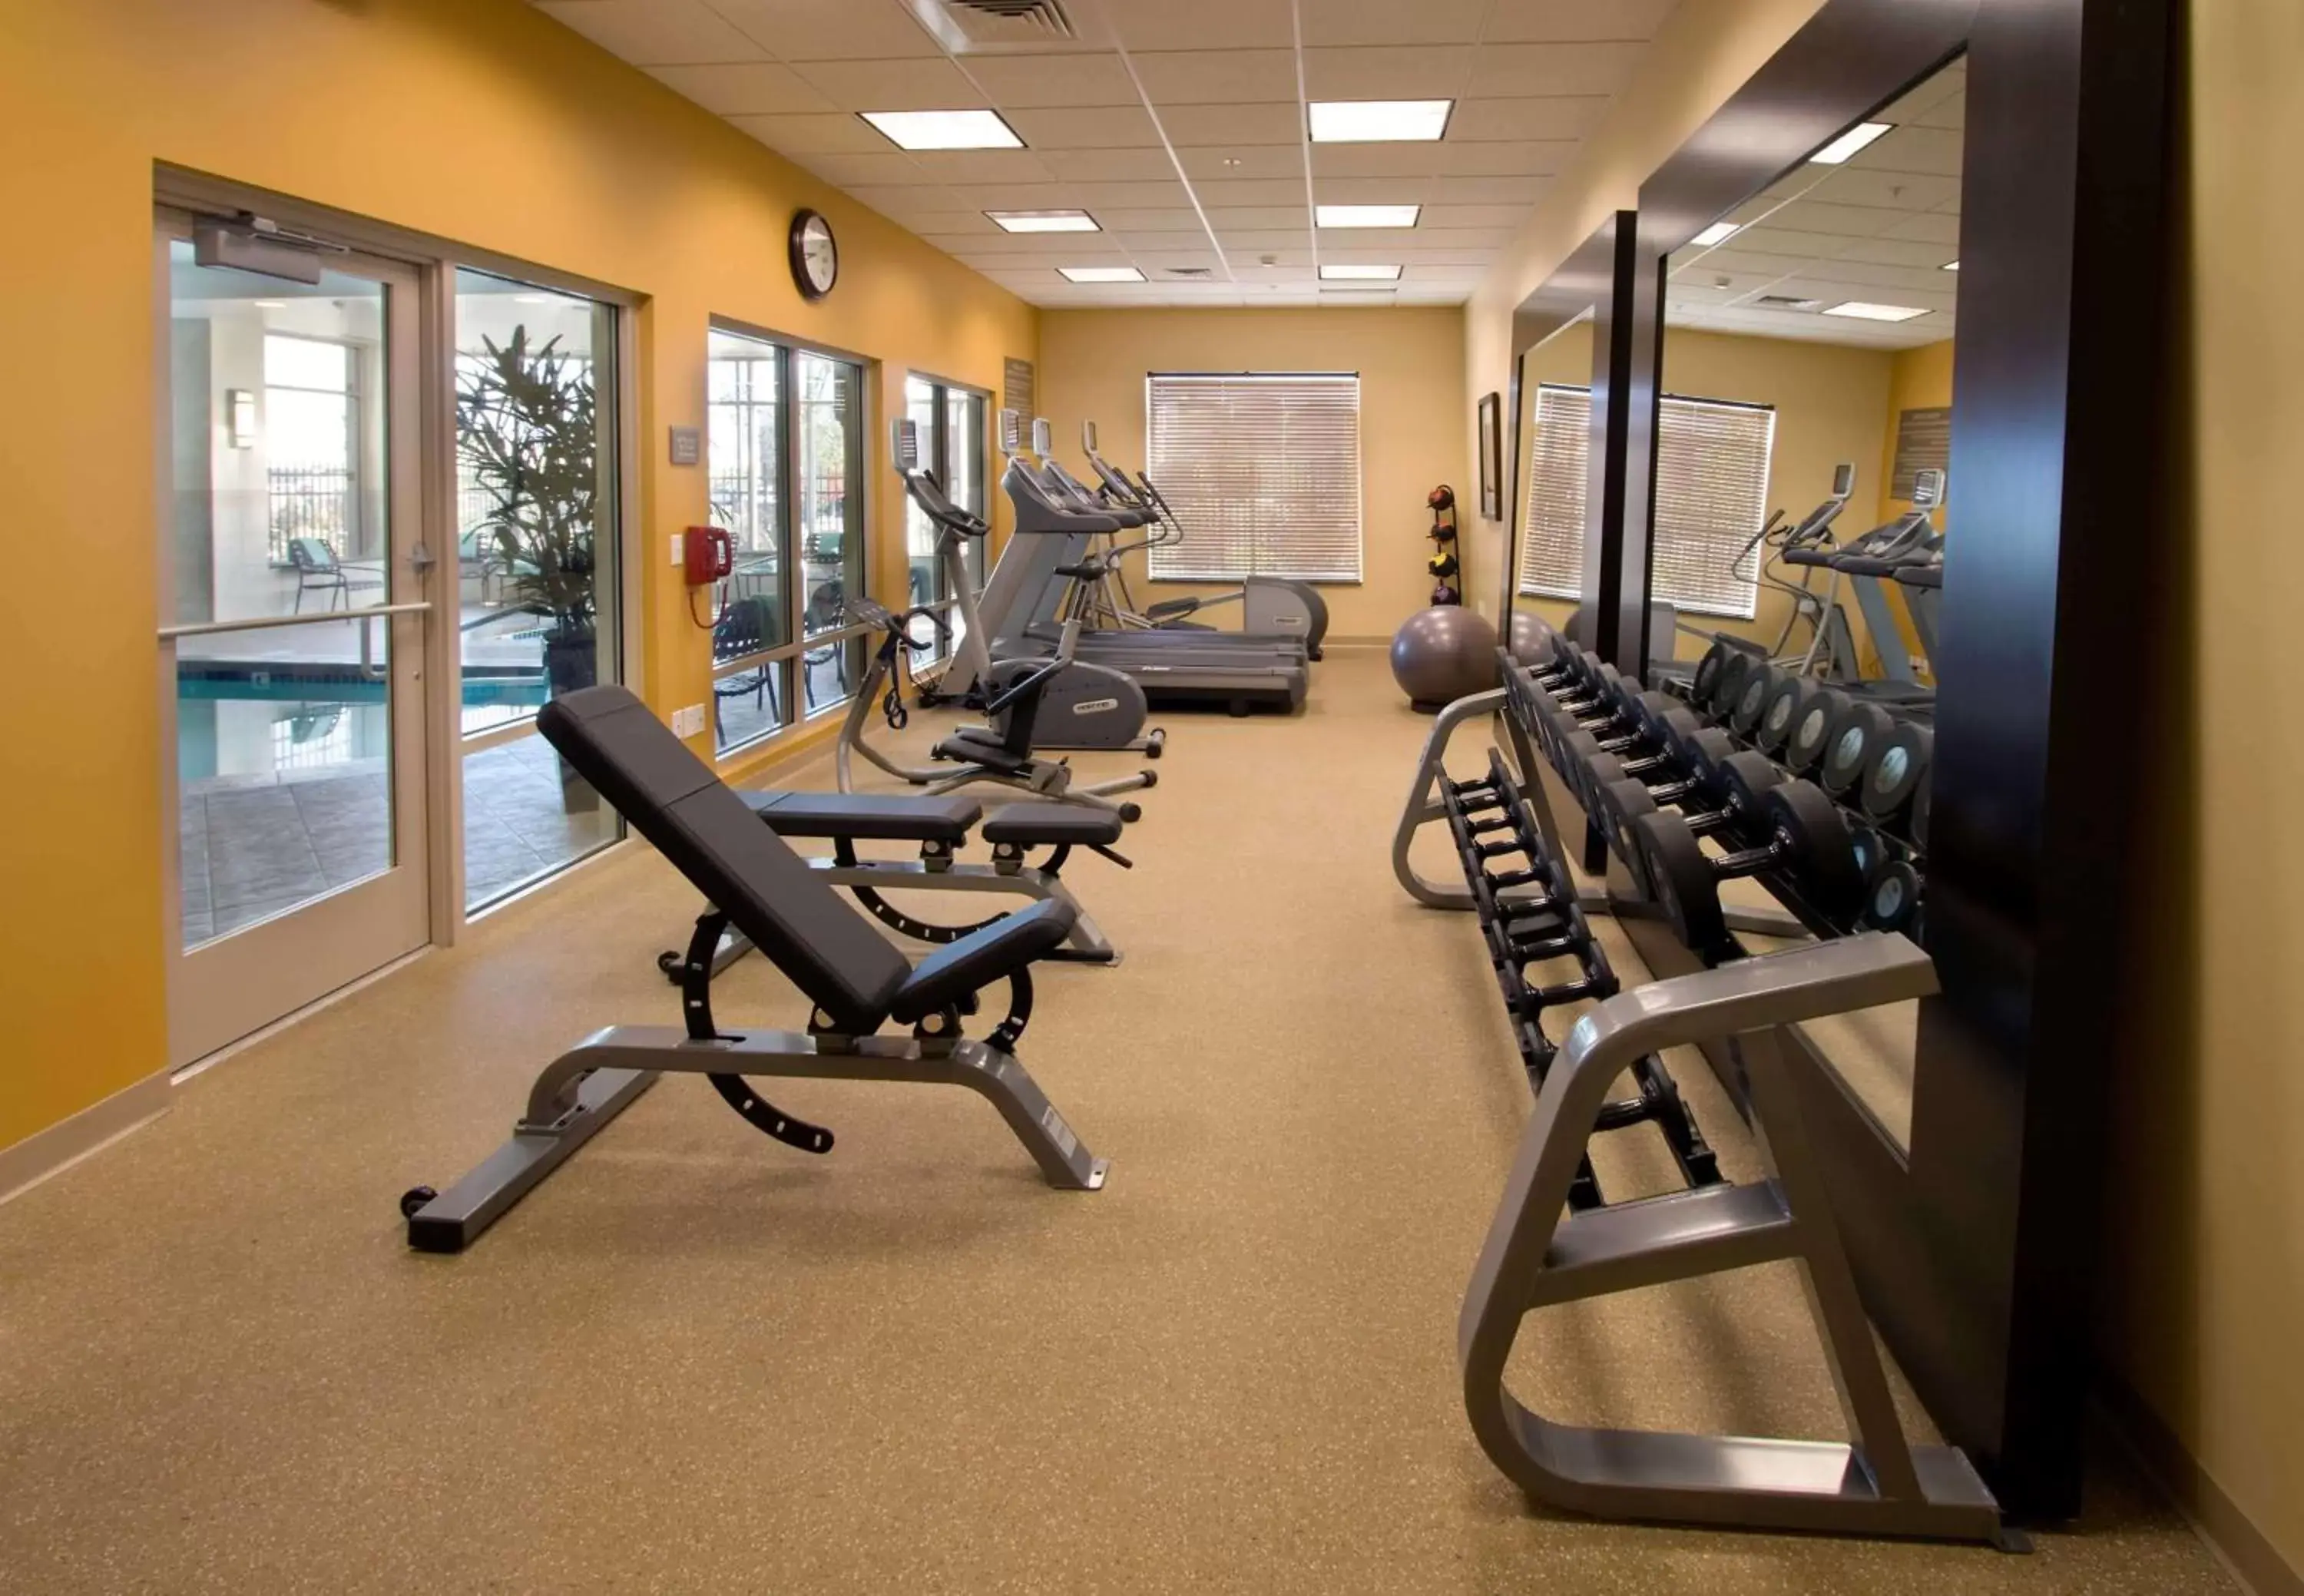 Fitness centre/facilities, Fitness Center/Facilities in Hilton Garden Inn Salt Lake City/Sandy